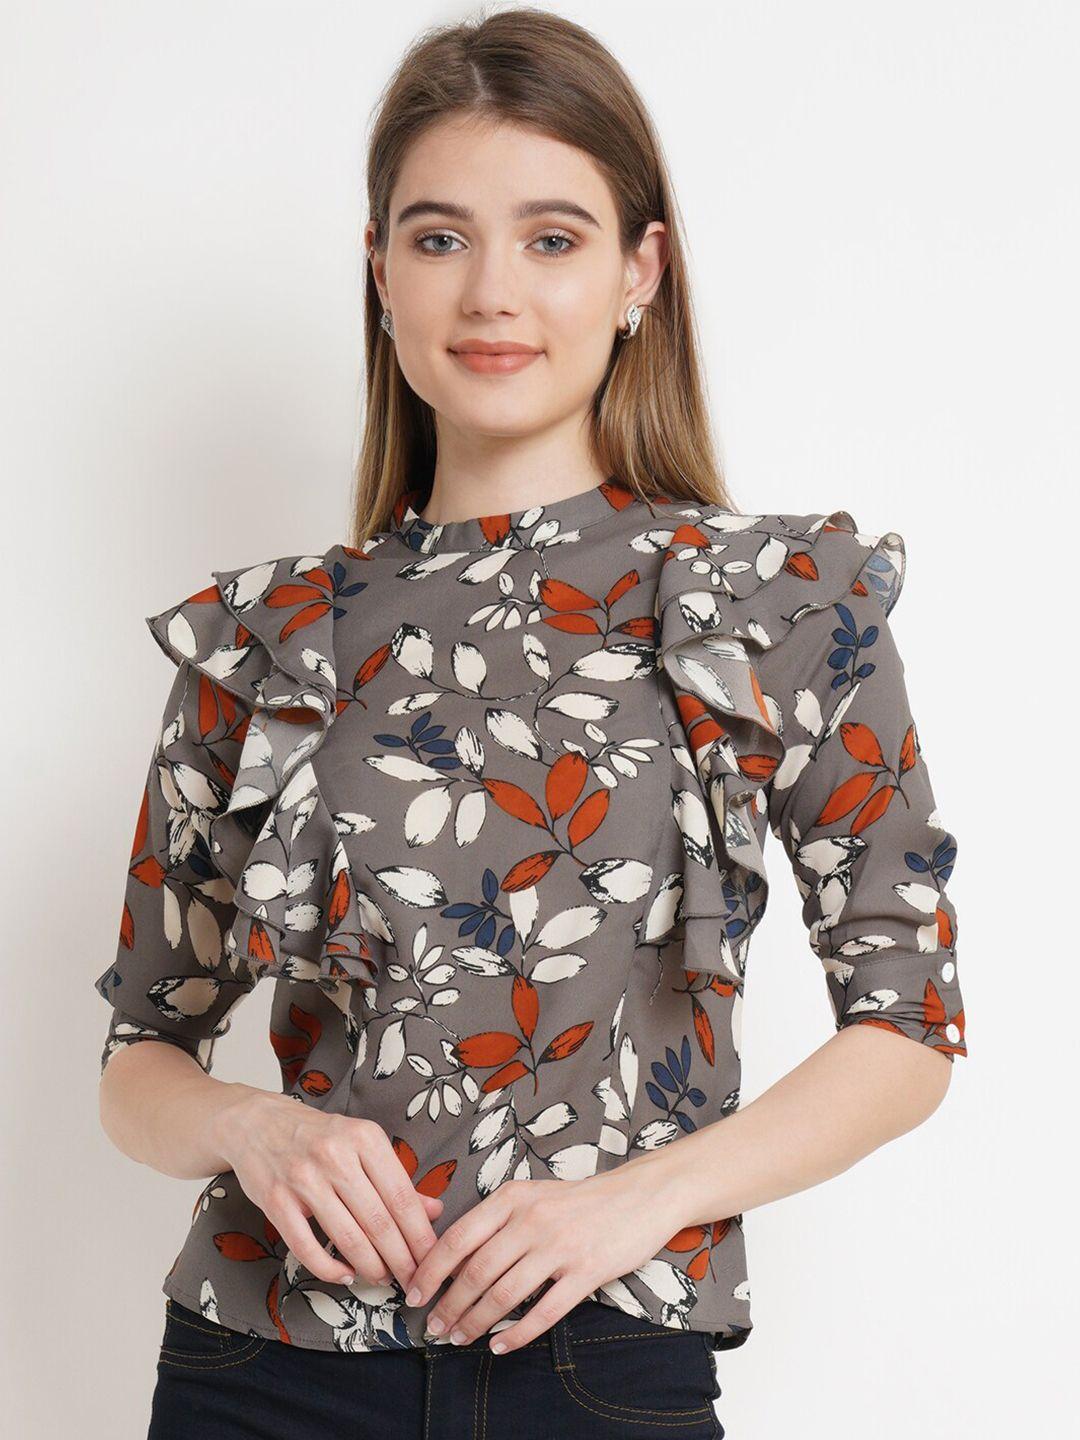 ix-impression-women-grey-floral-printed-ruffles-georgette-top